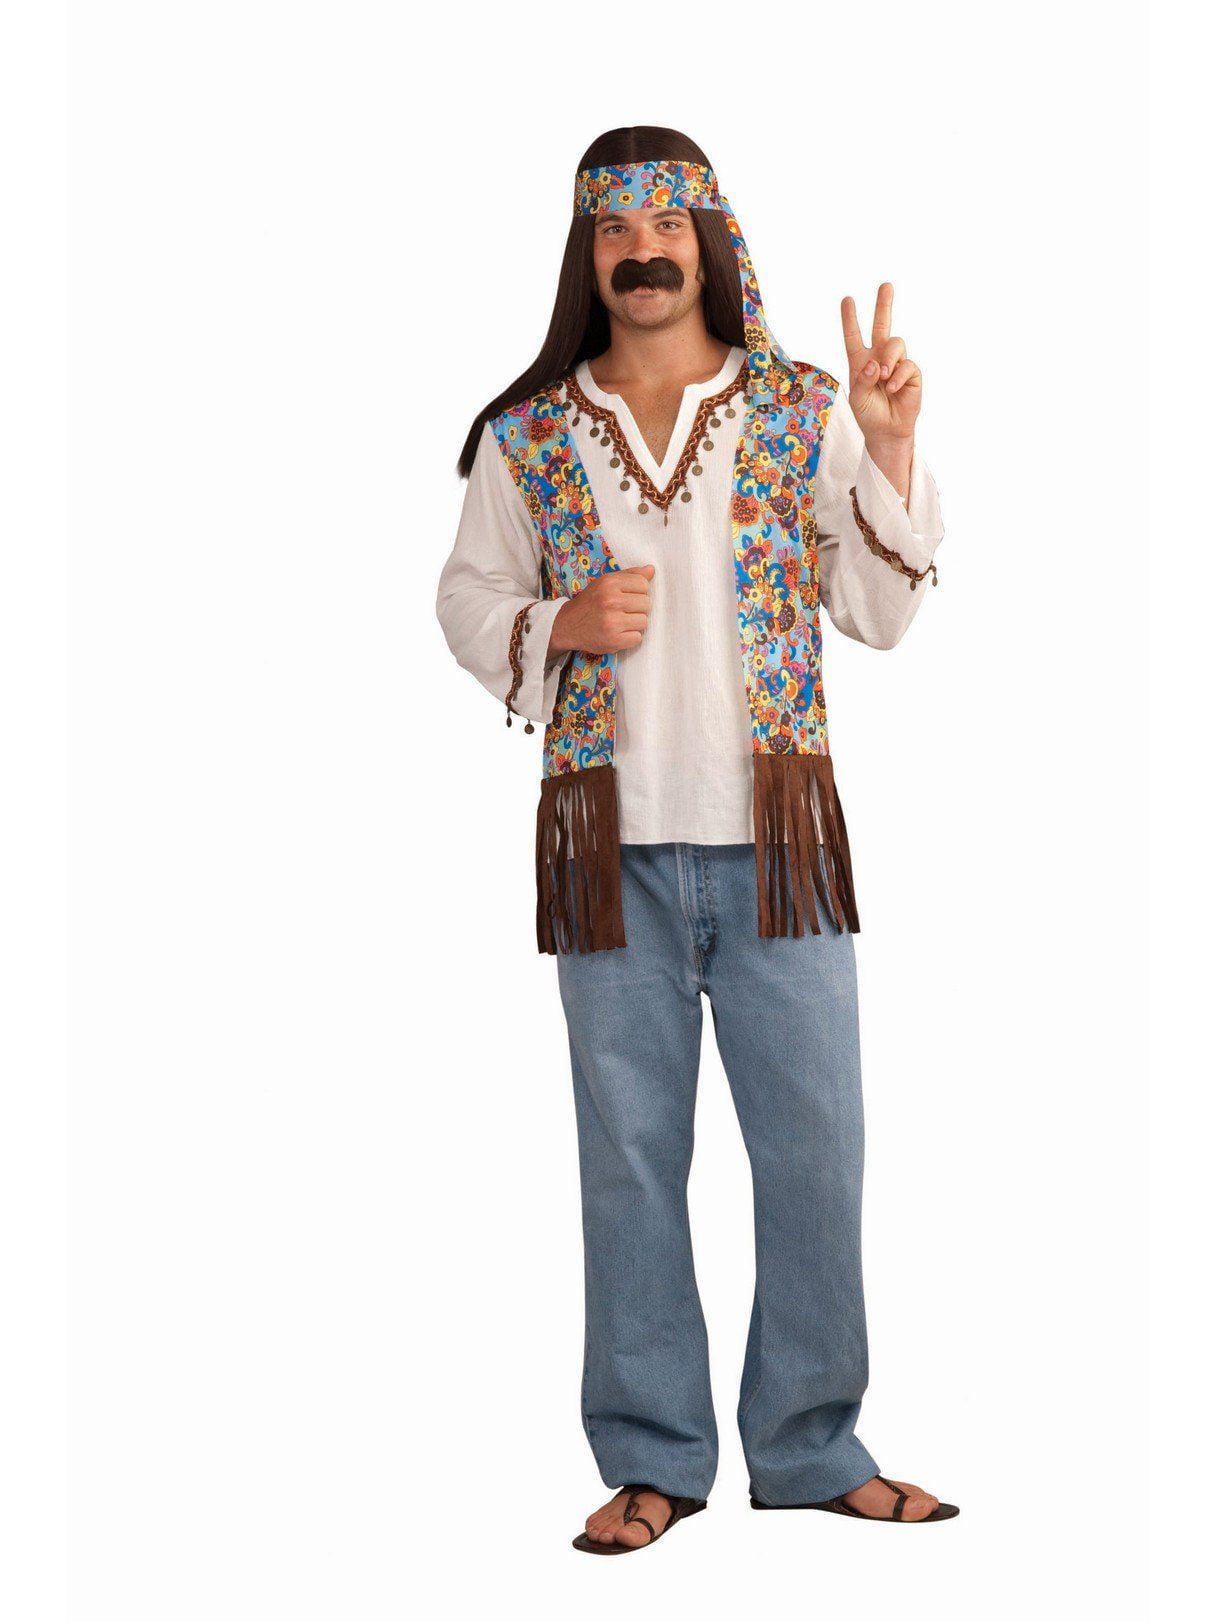 Groovy Male Adult Costume - Walmart.com